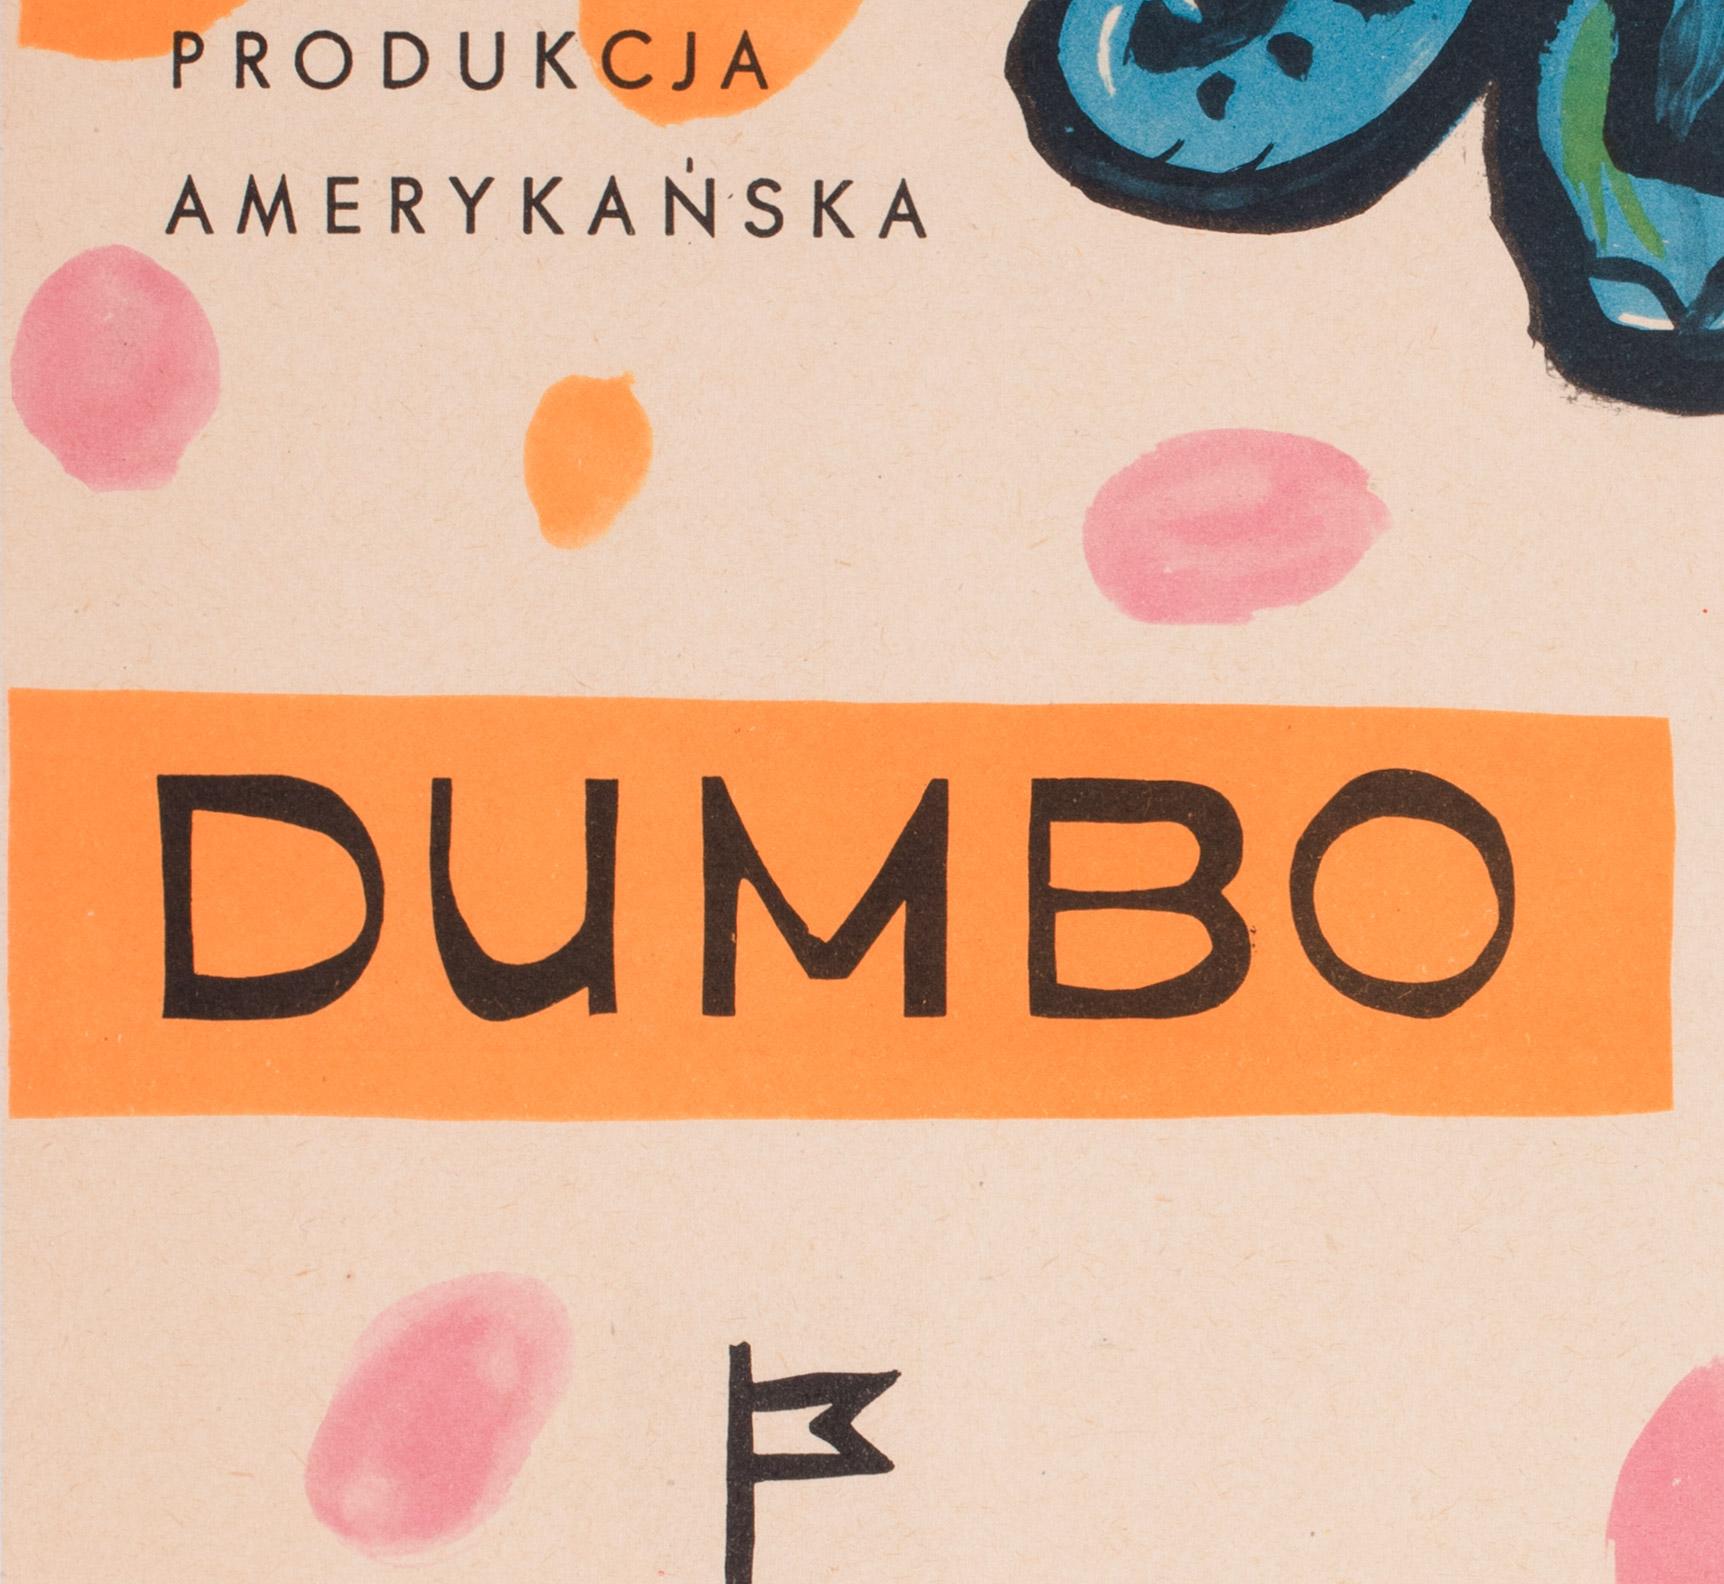 Dumbo Polish Film Movie Poster, Anna Huskowska, 1961 For Sale 1